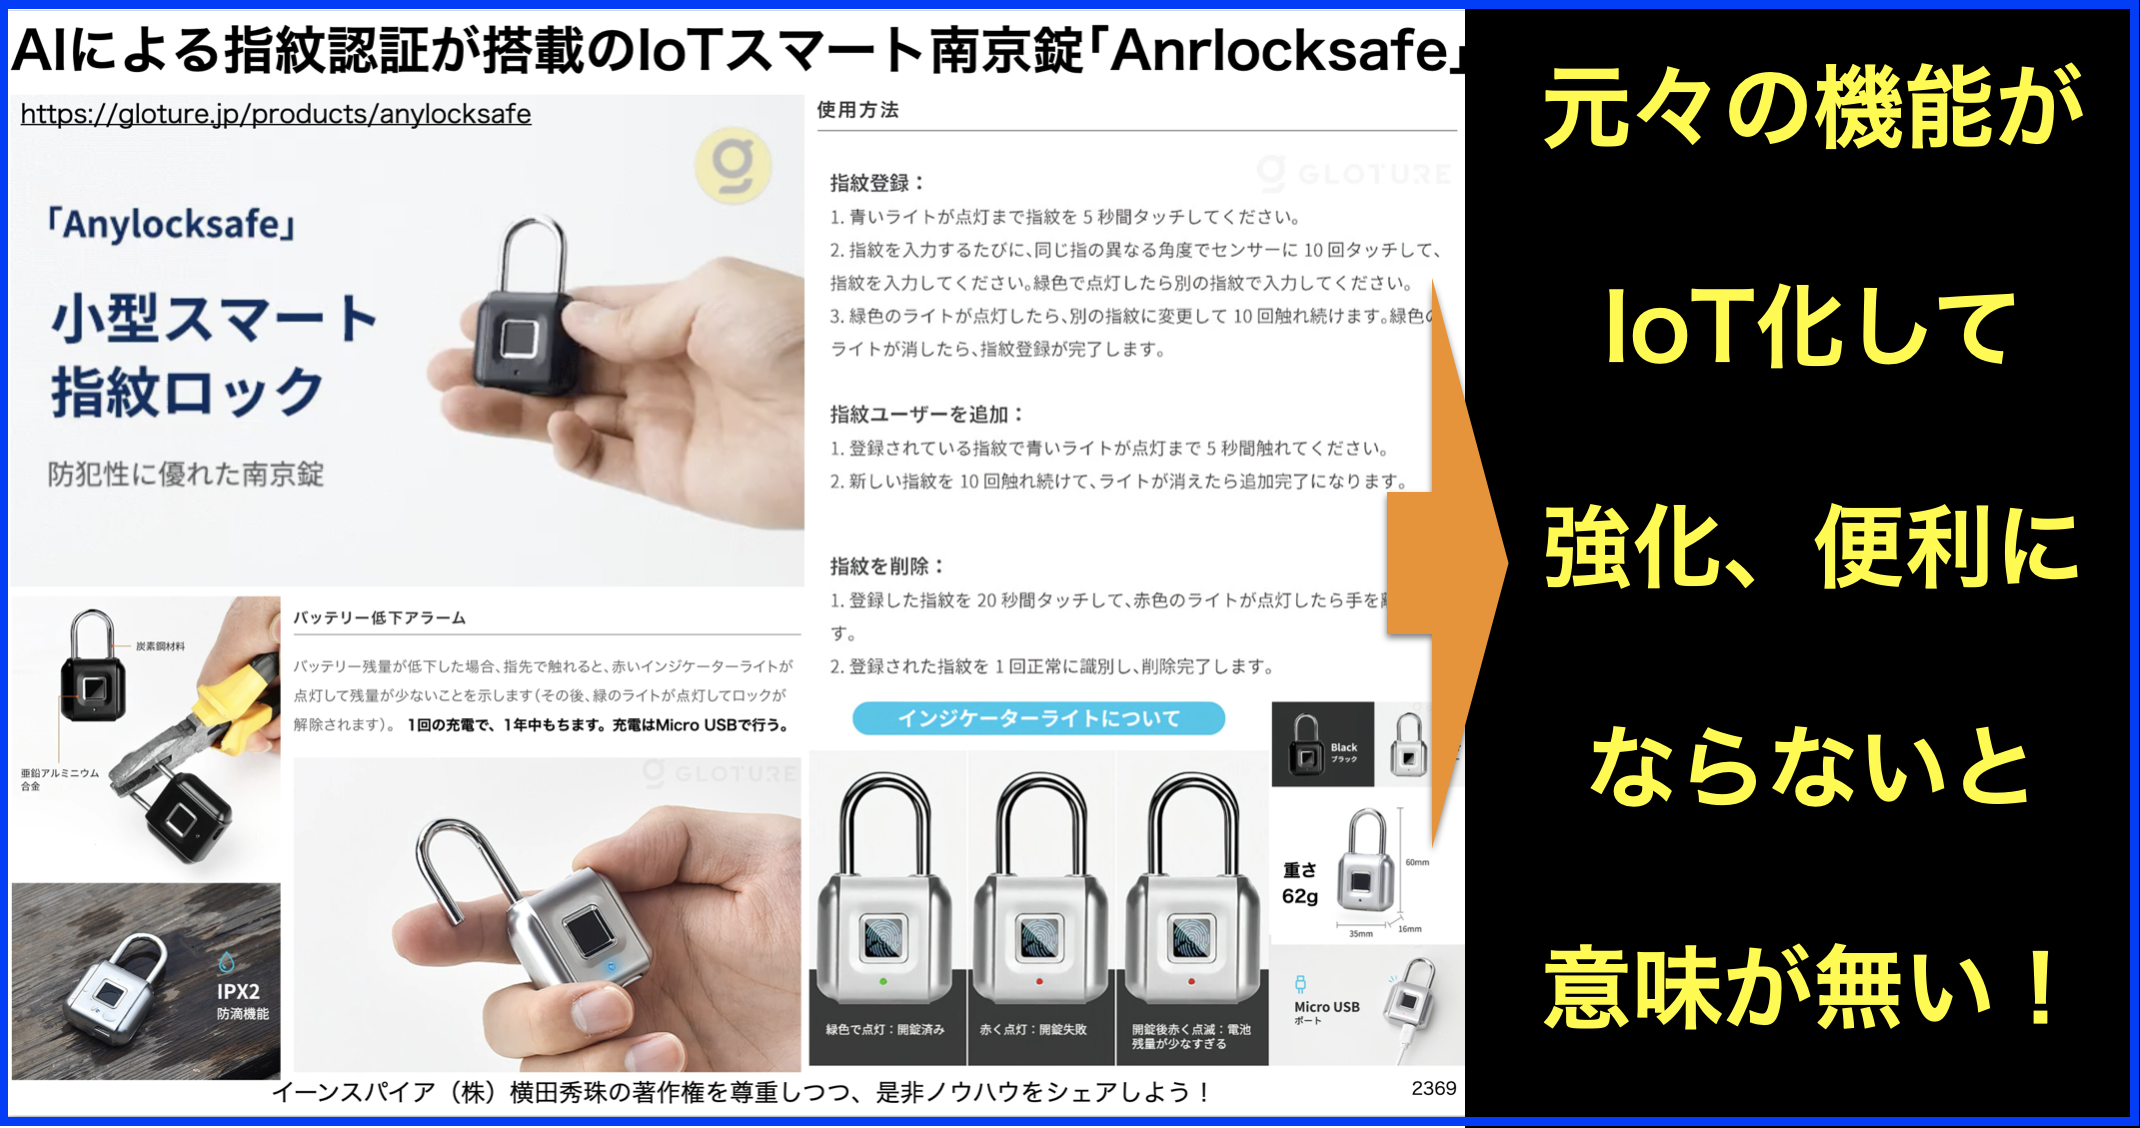 AIの指紋認証が搭載したIoTスマート南京錠｢Anylocksafe｣